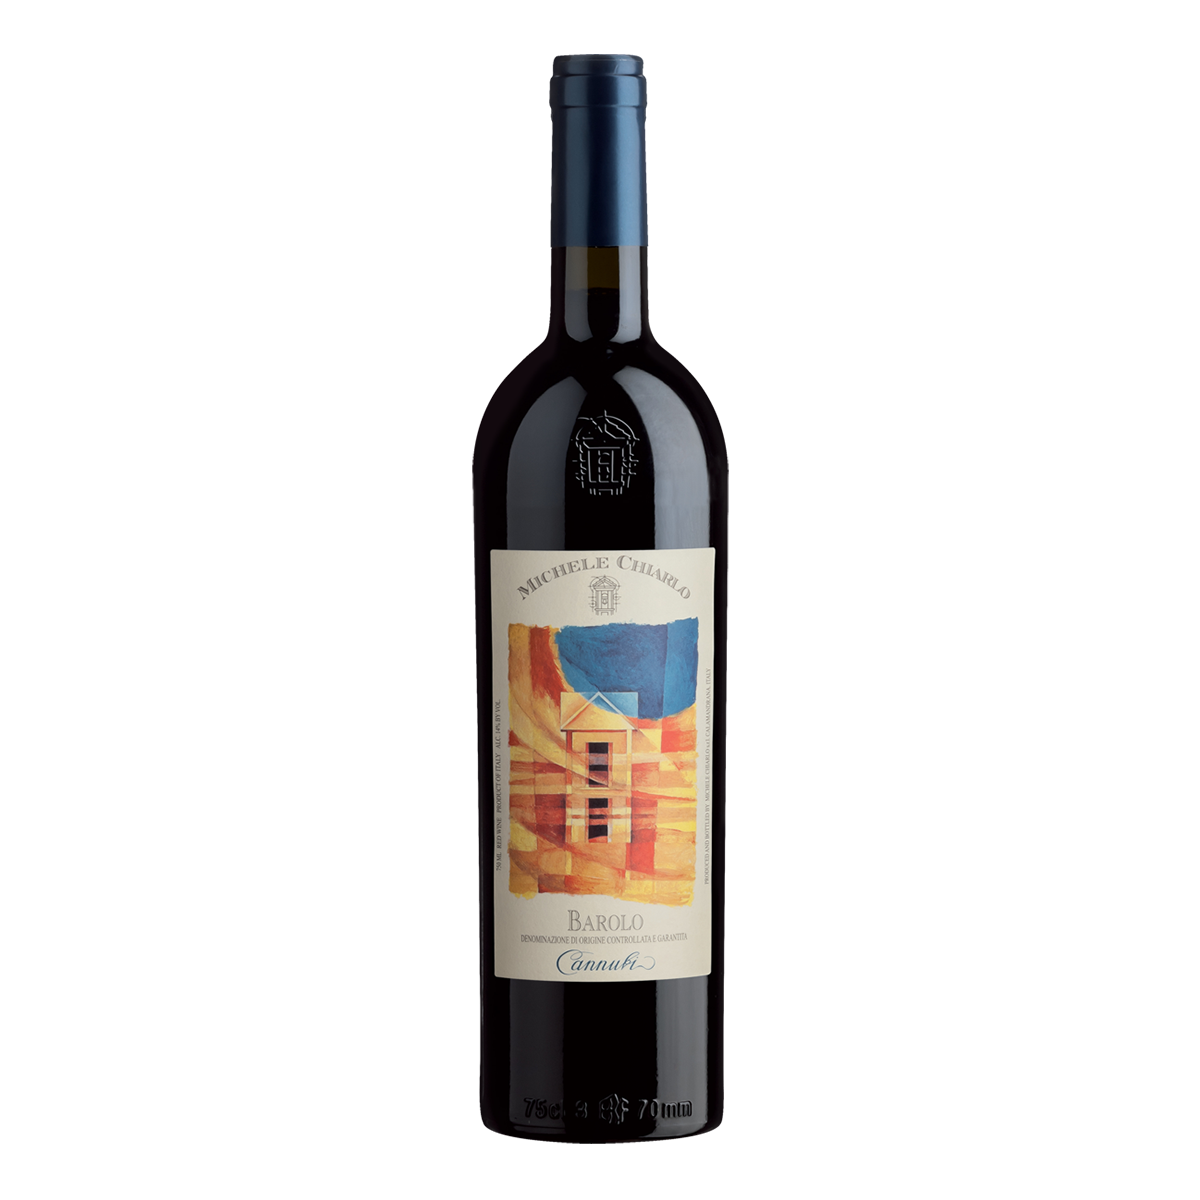 ITPC1004 義大利佳樂巴羅洛坎諾比園頂級紅酒 Michele Chiarlo Barolo D.O.C.G. Cannubi